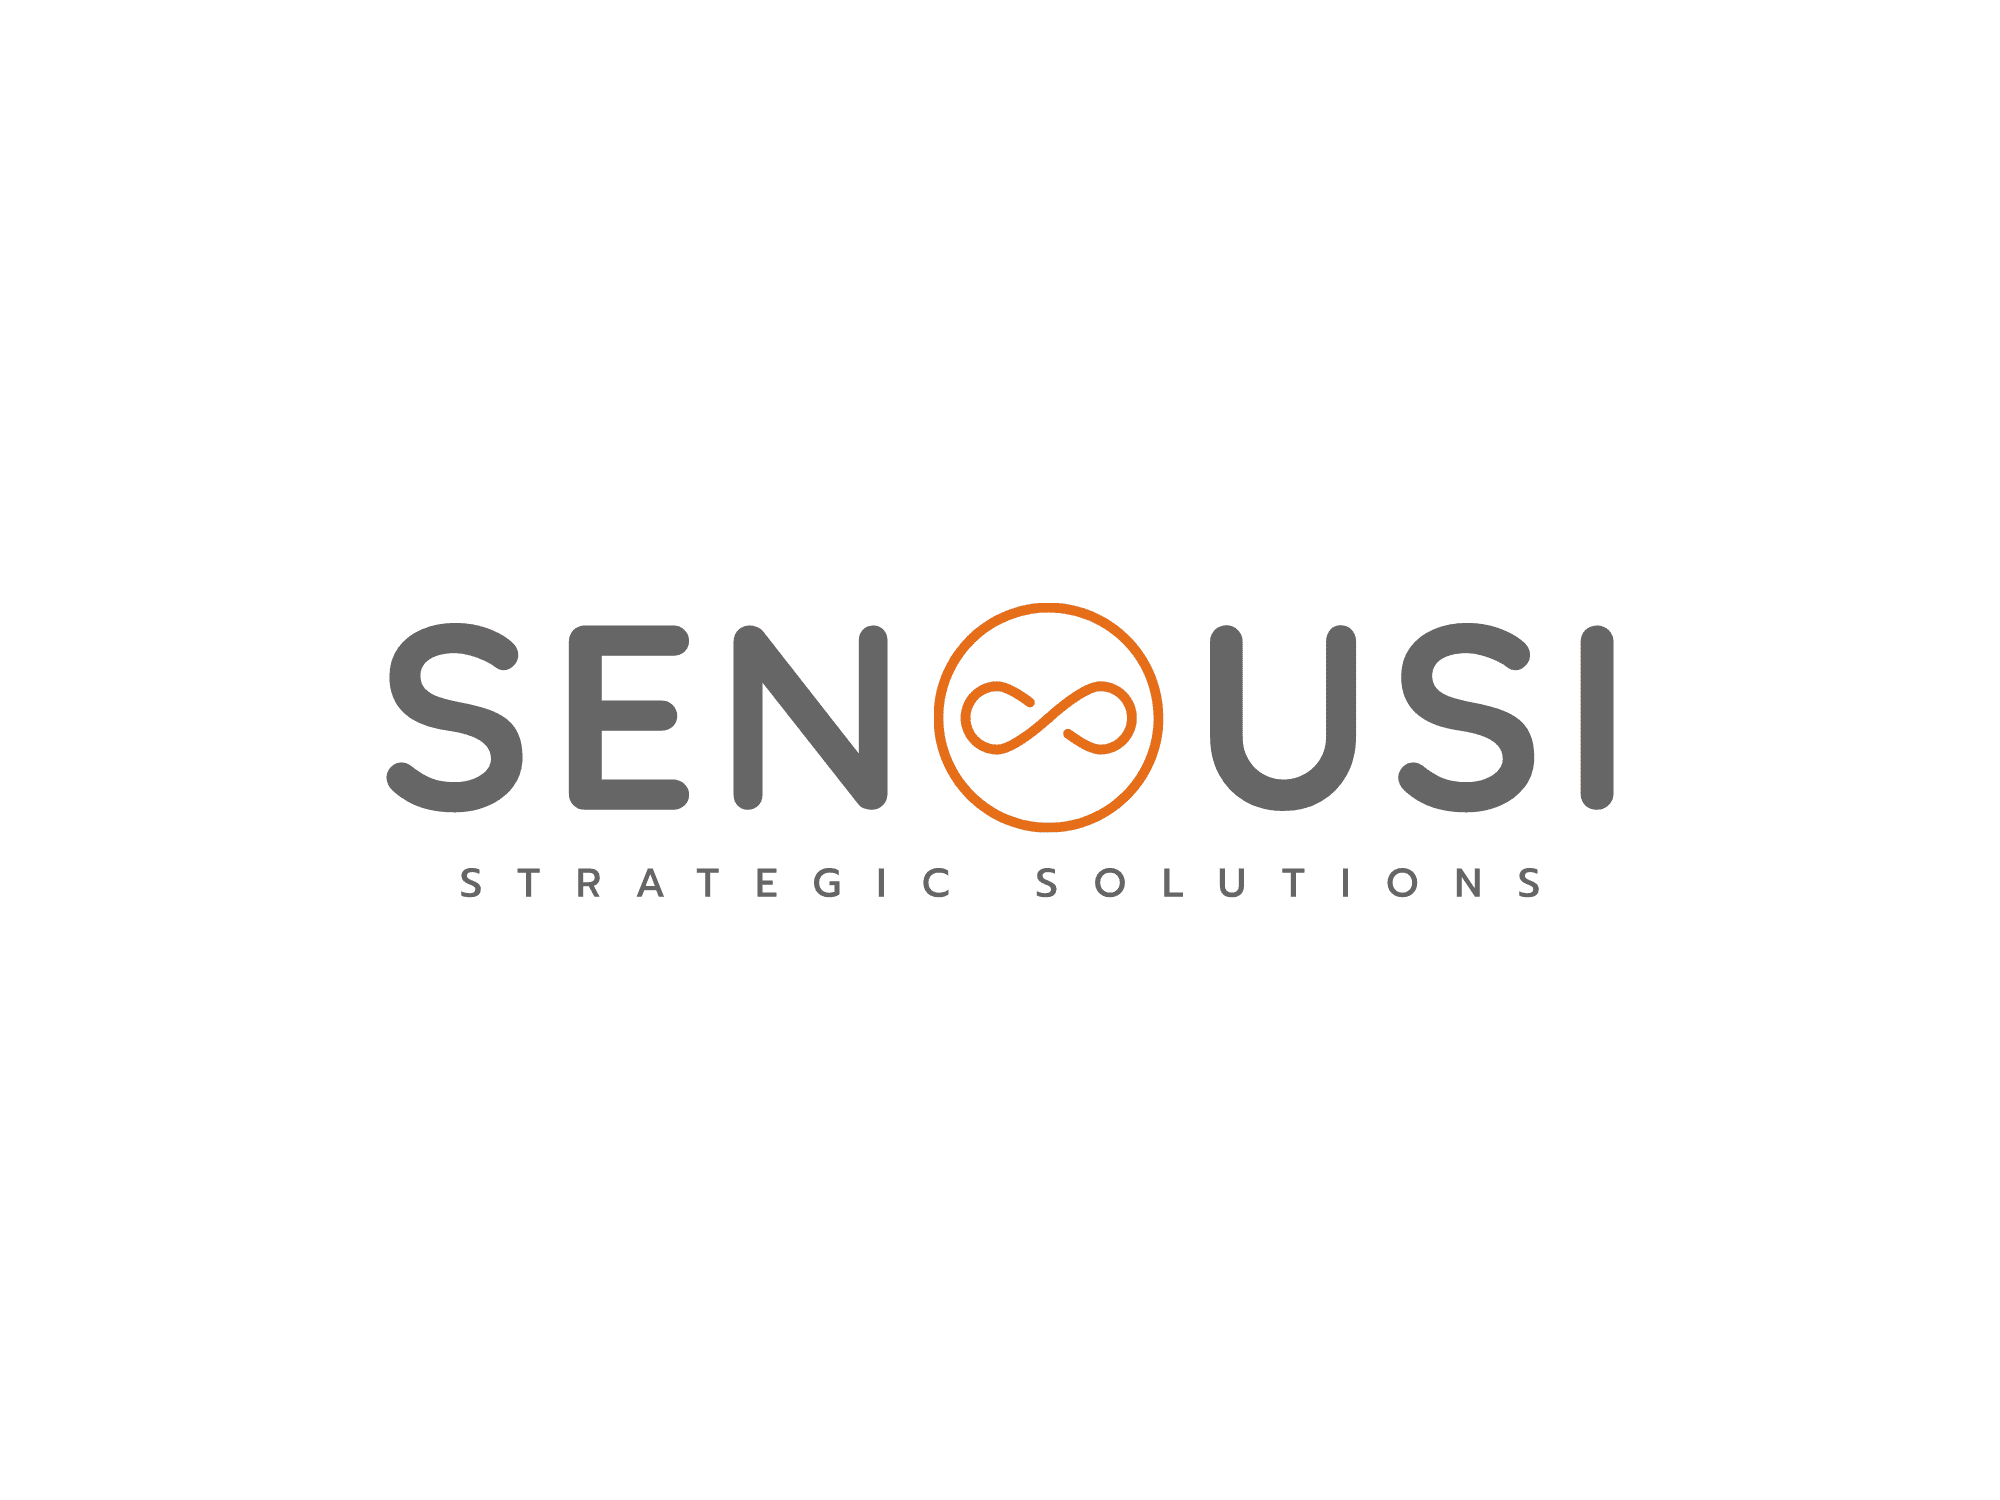 Senousi Strategic Solutions - Logo